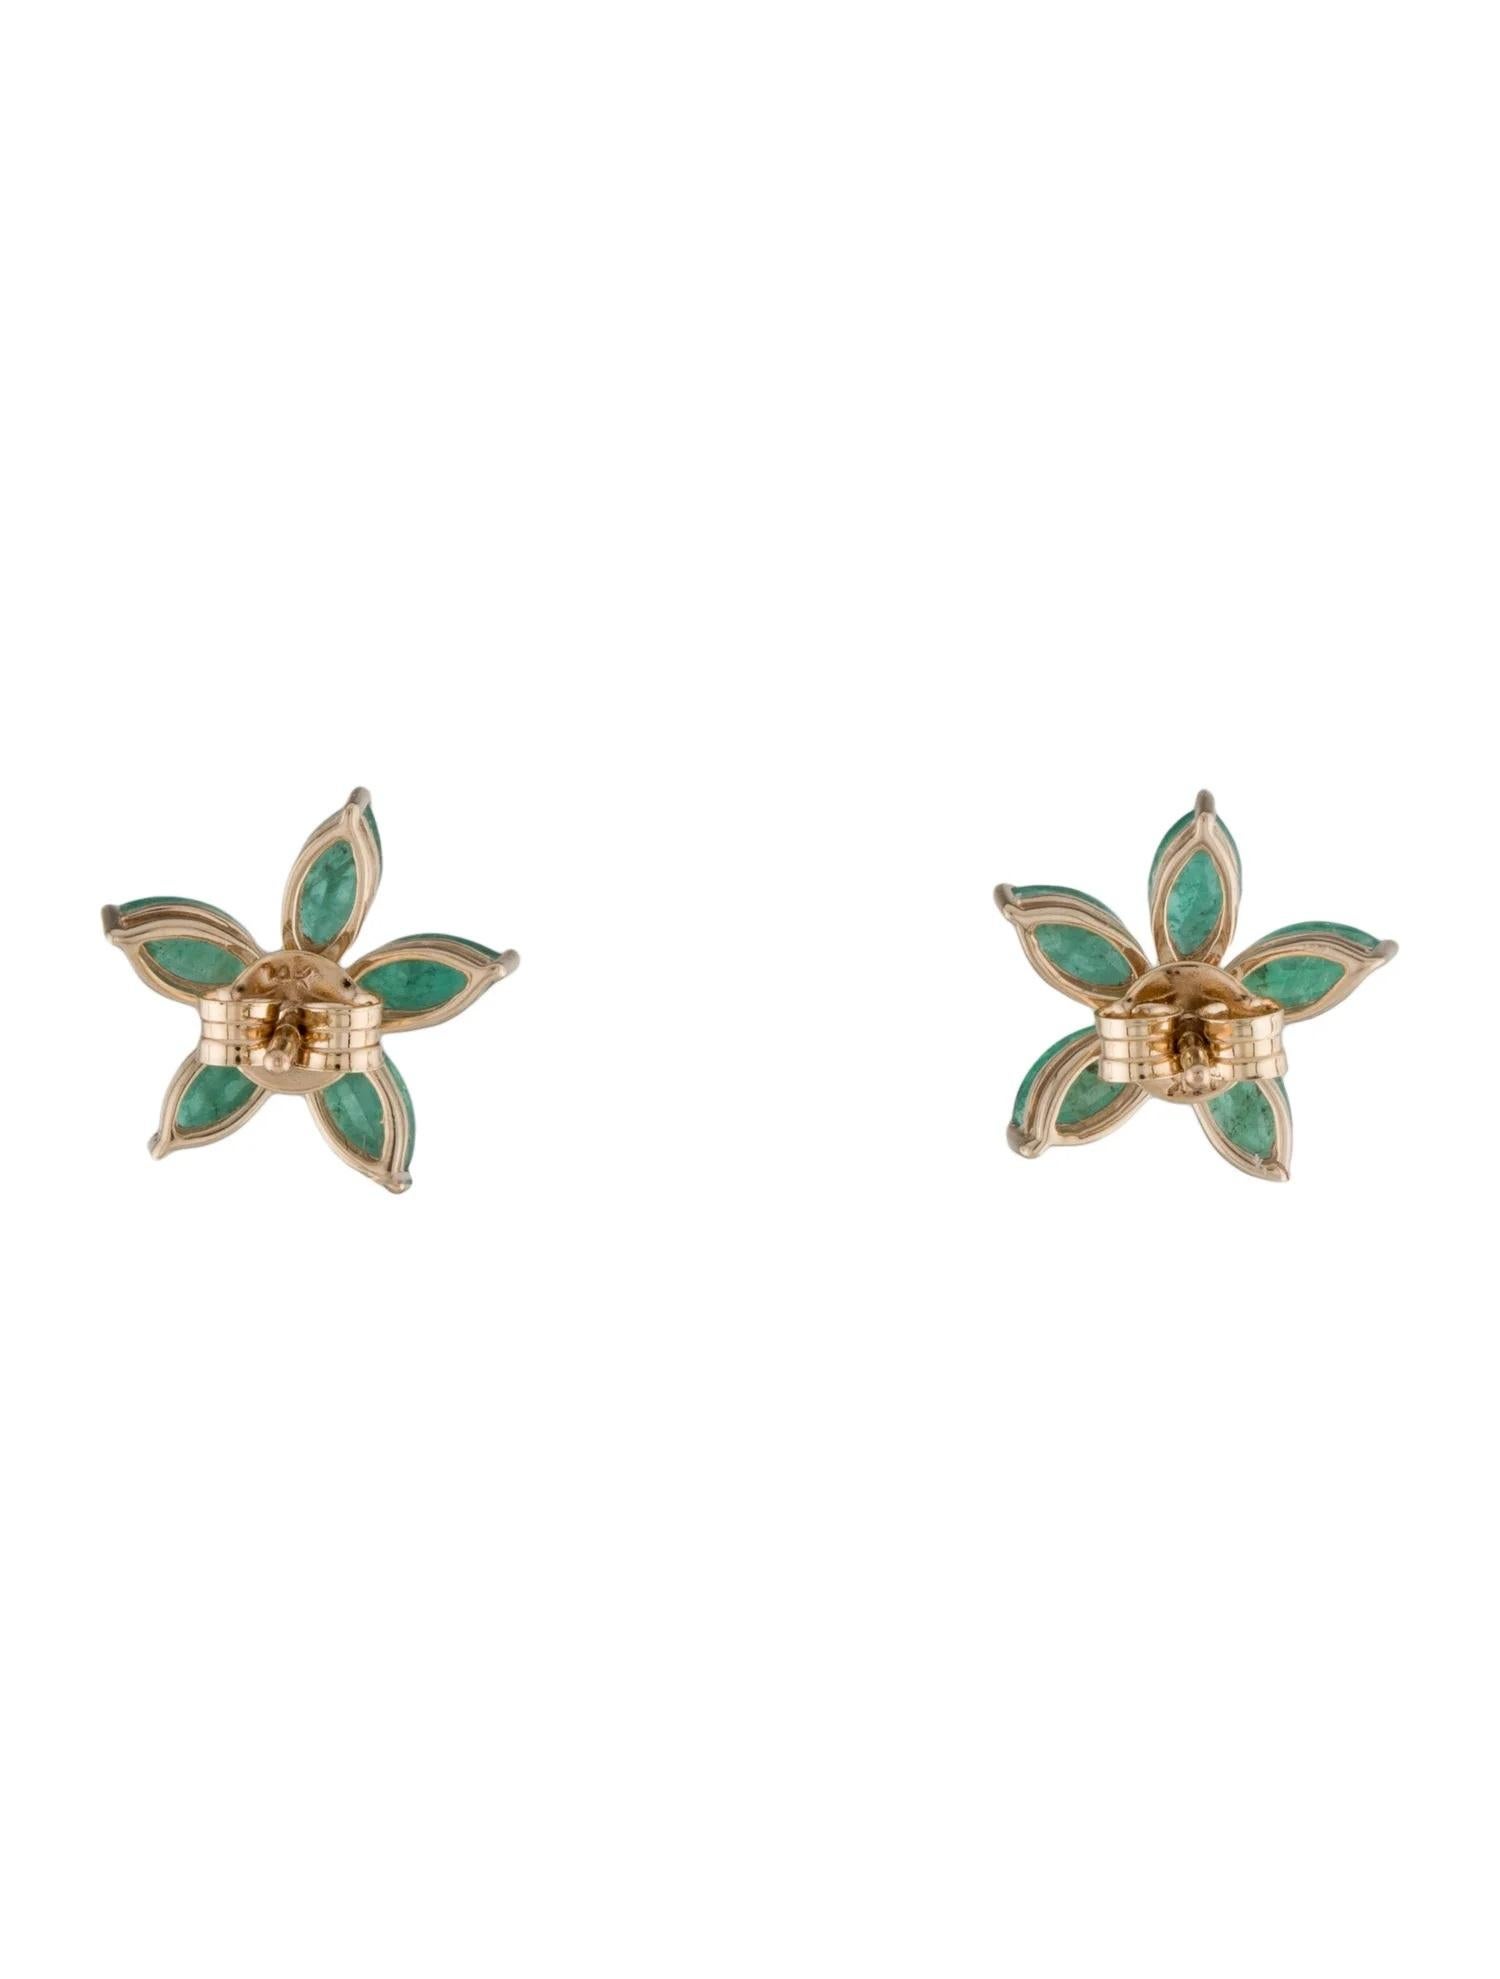 Artist Elegant 14K Yellow Gold Emerald and Diamond Earrings For Sale